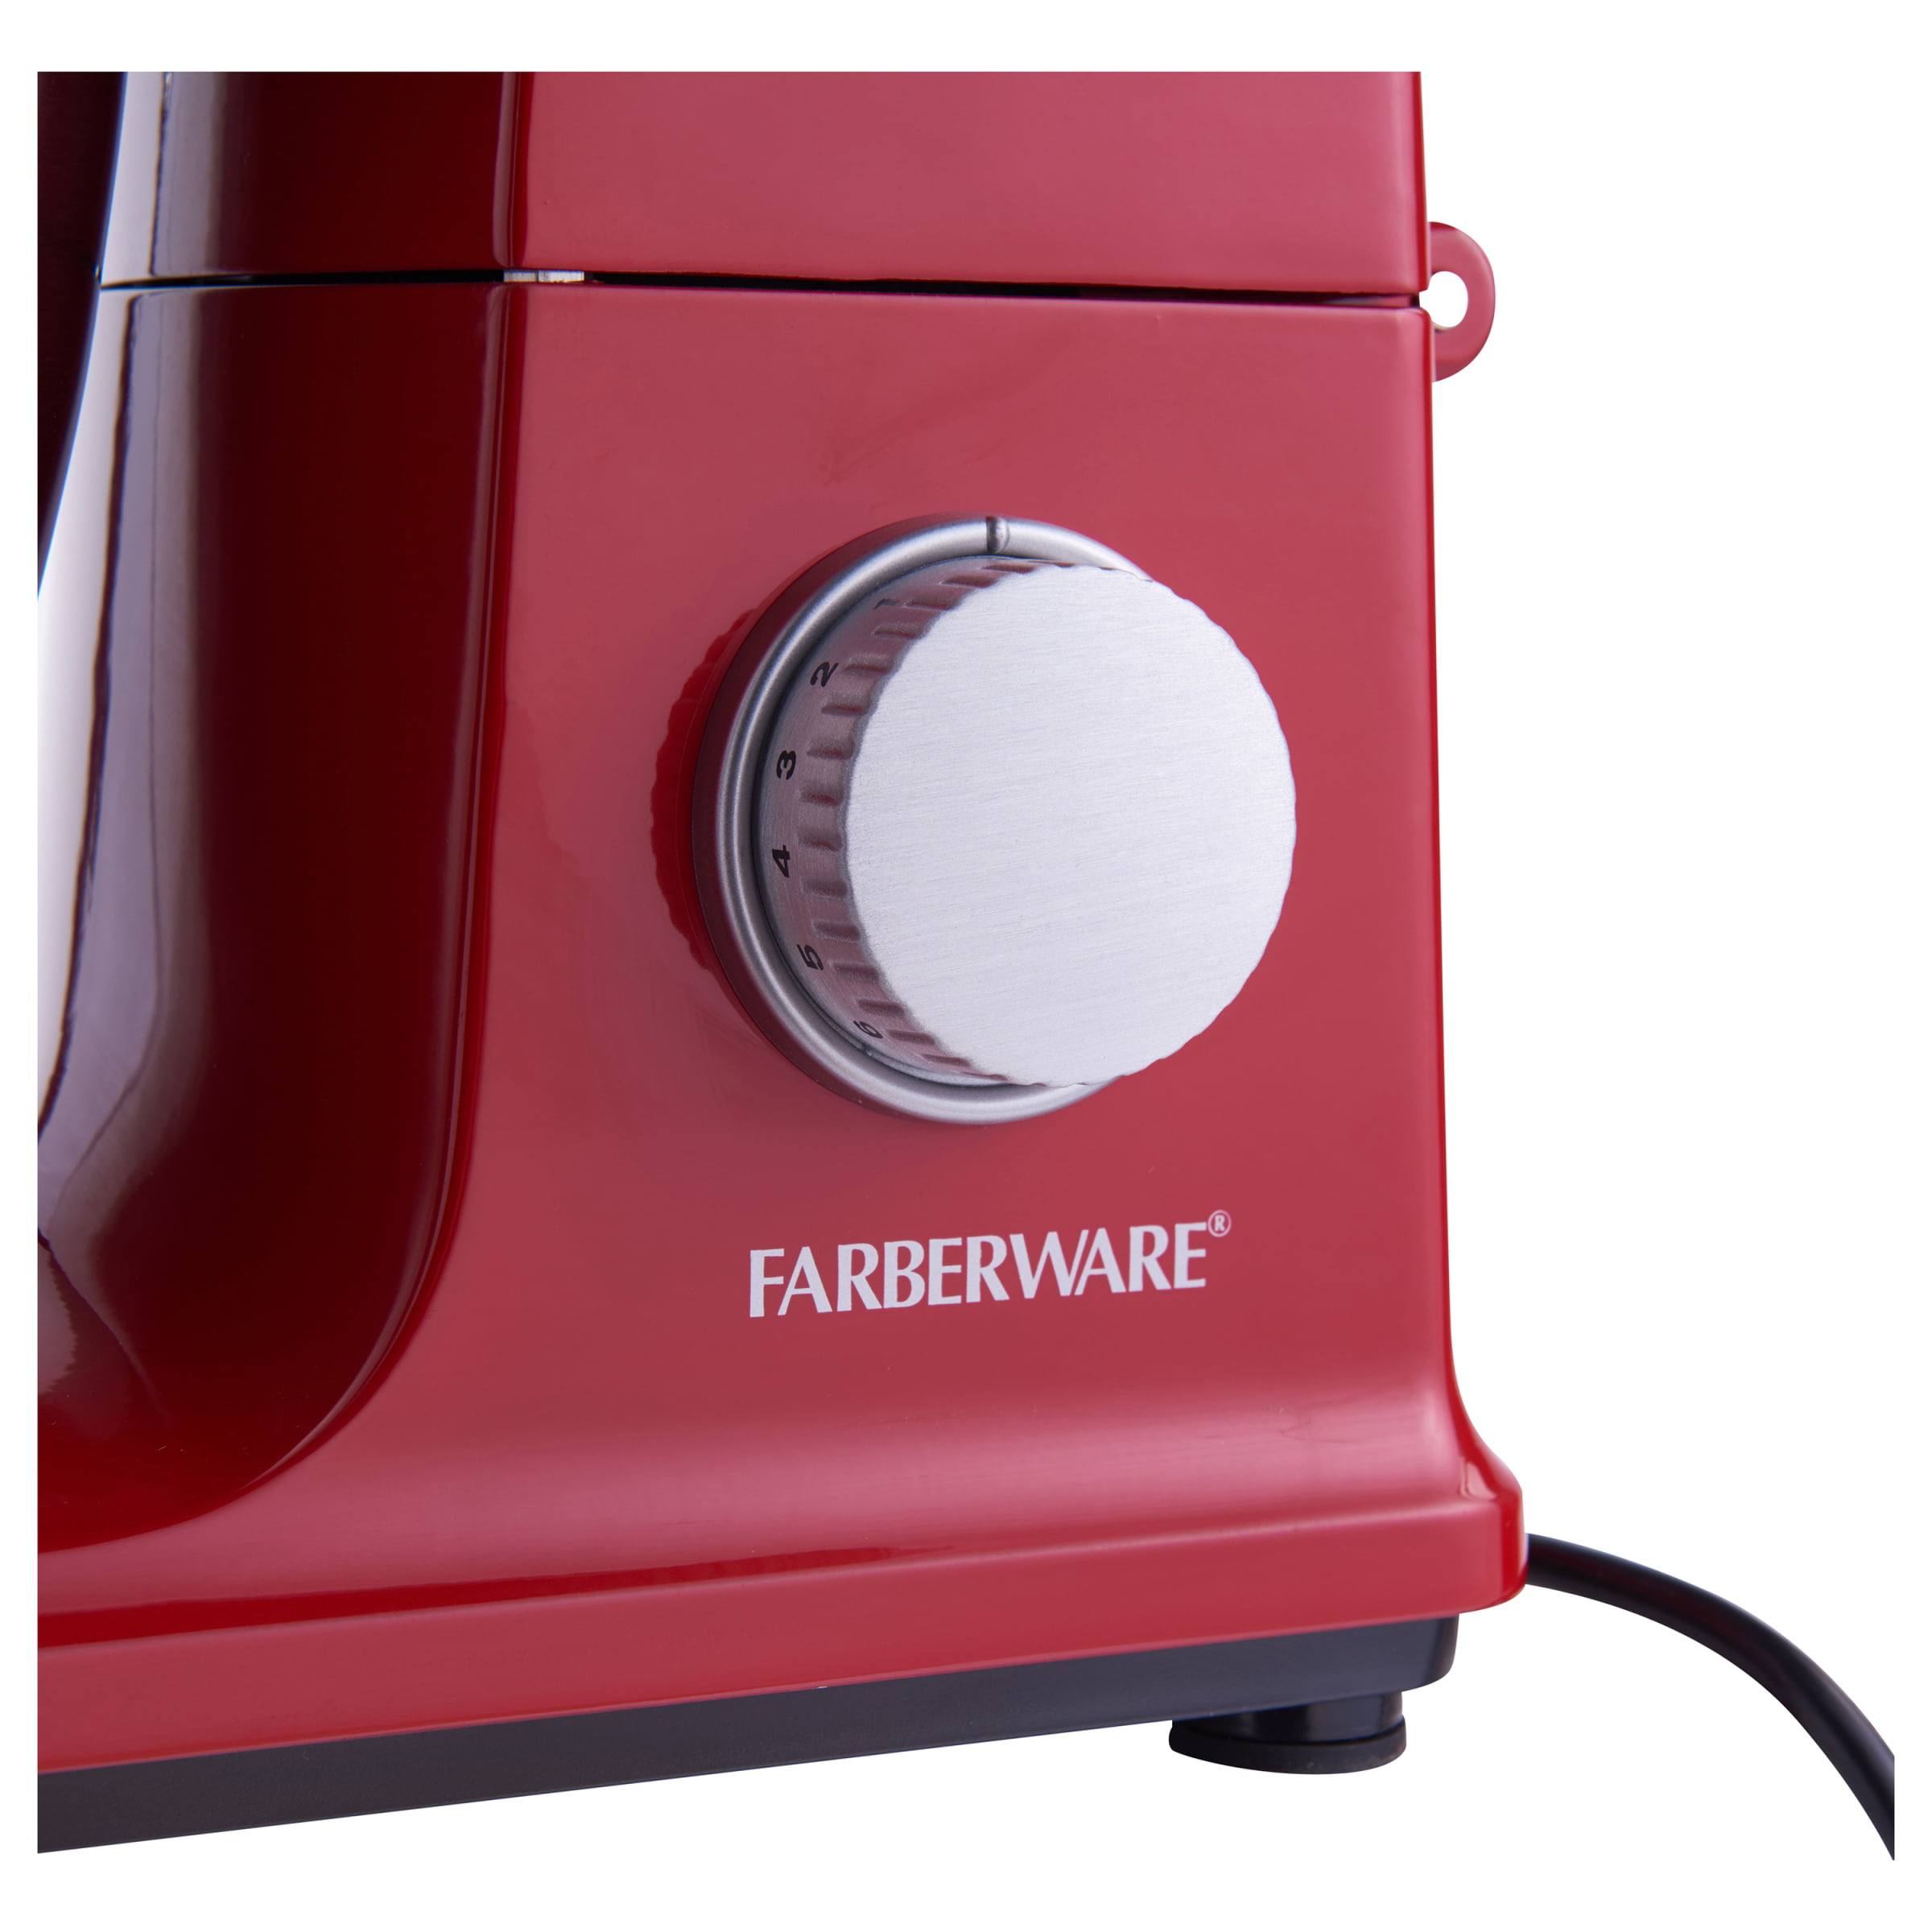 Farberware 4.7 Quart Teal Stand Mixer – Walmart Inventory Checker –  BrickSeek